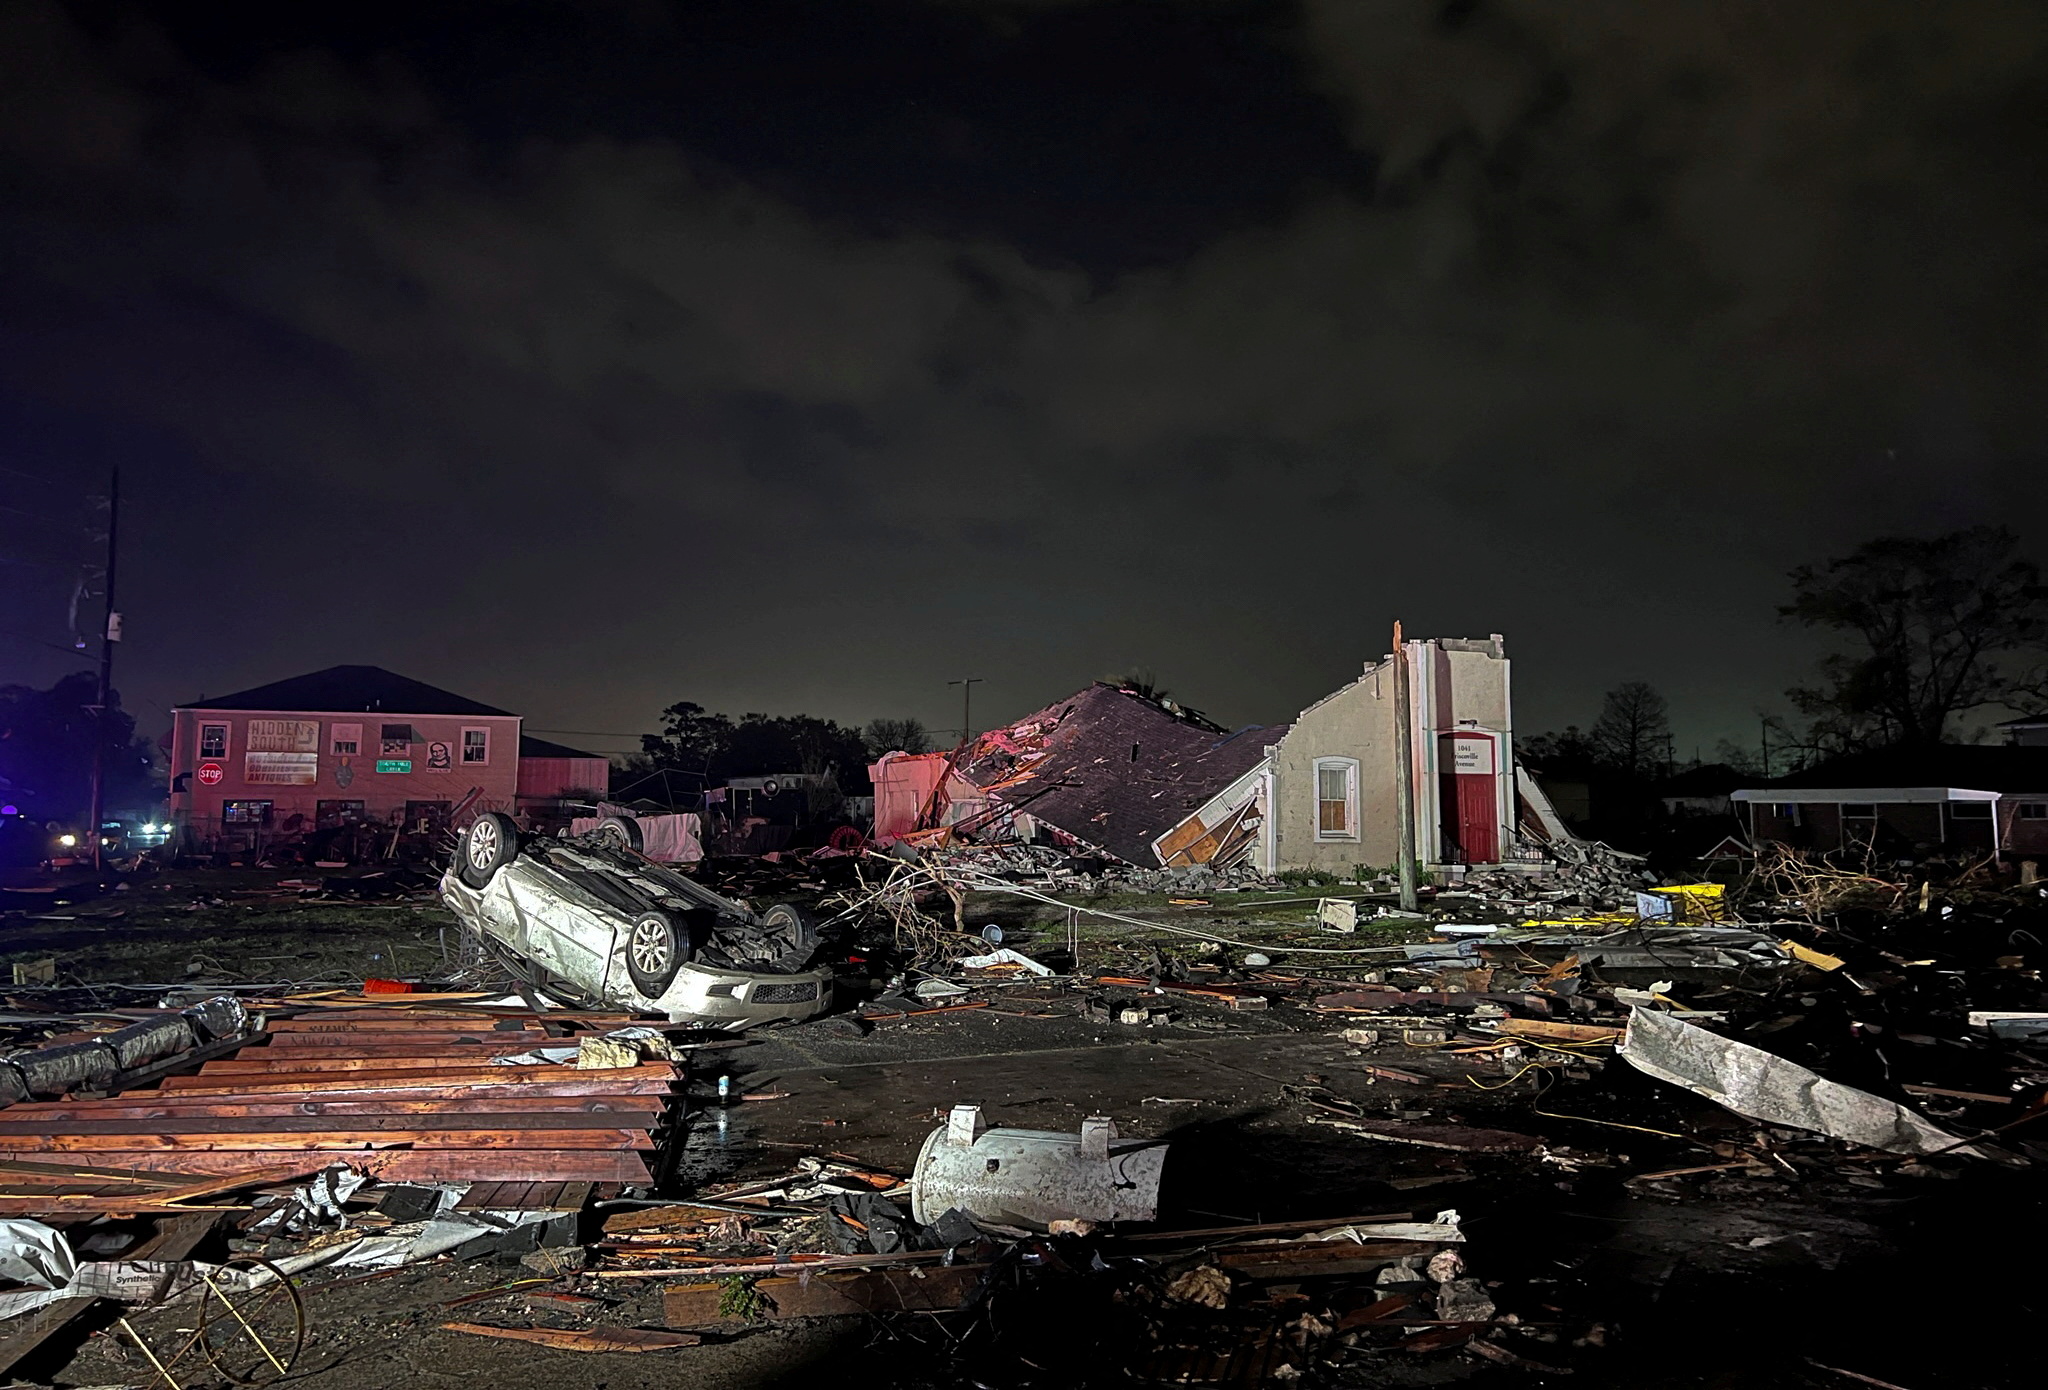 A large tornado strikes New Orleans